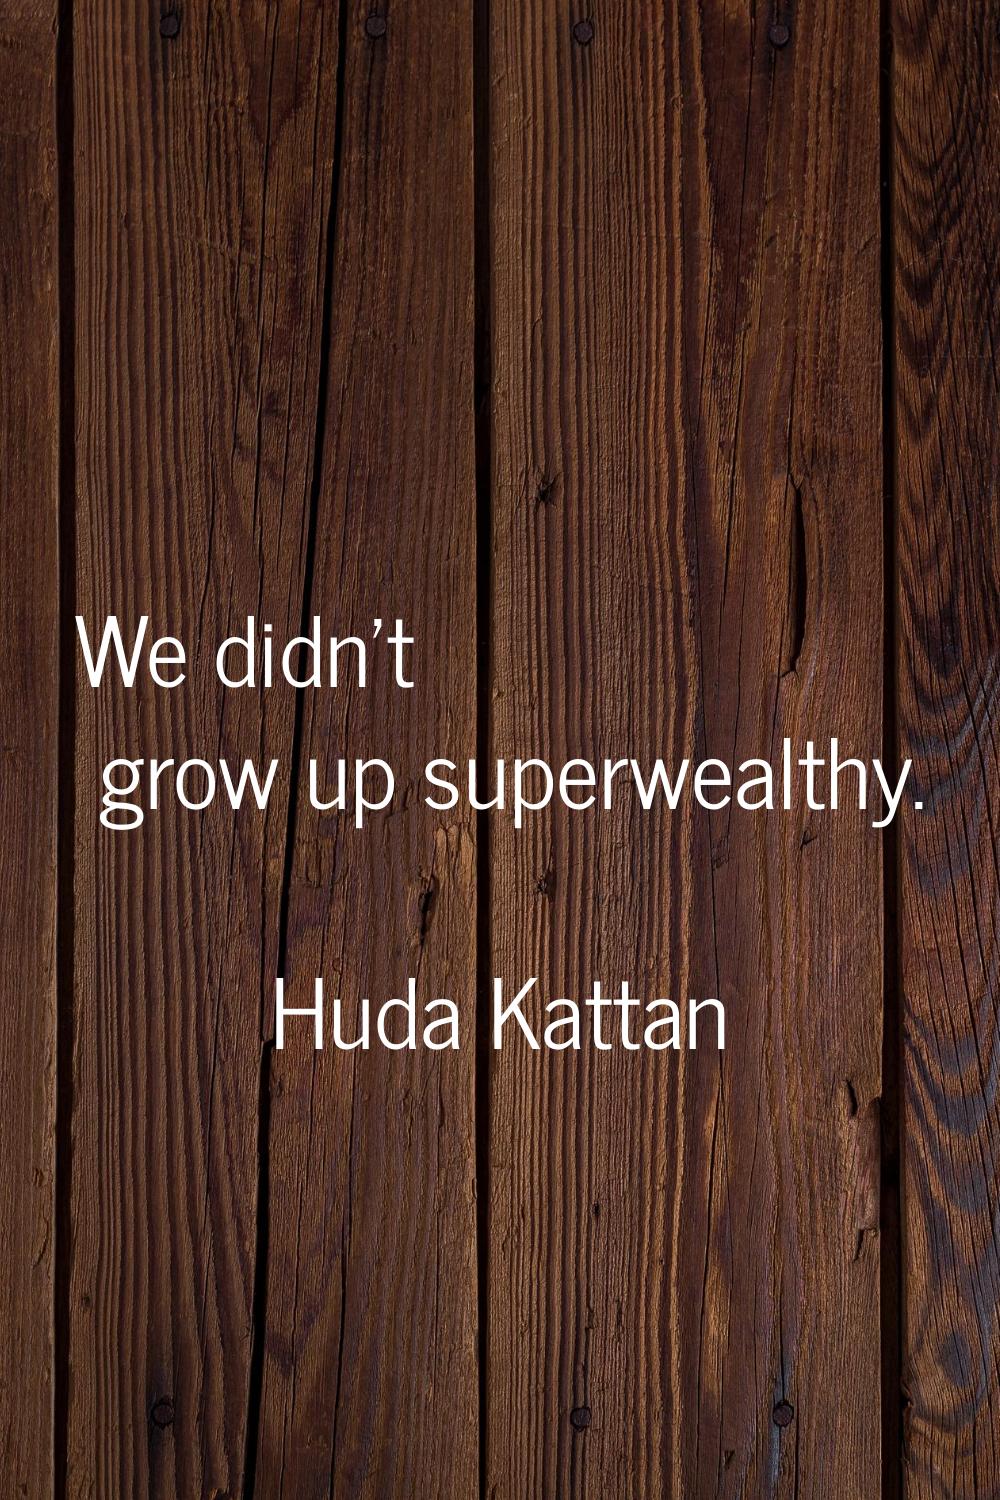 We didn't grow up superwealthy.